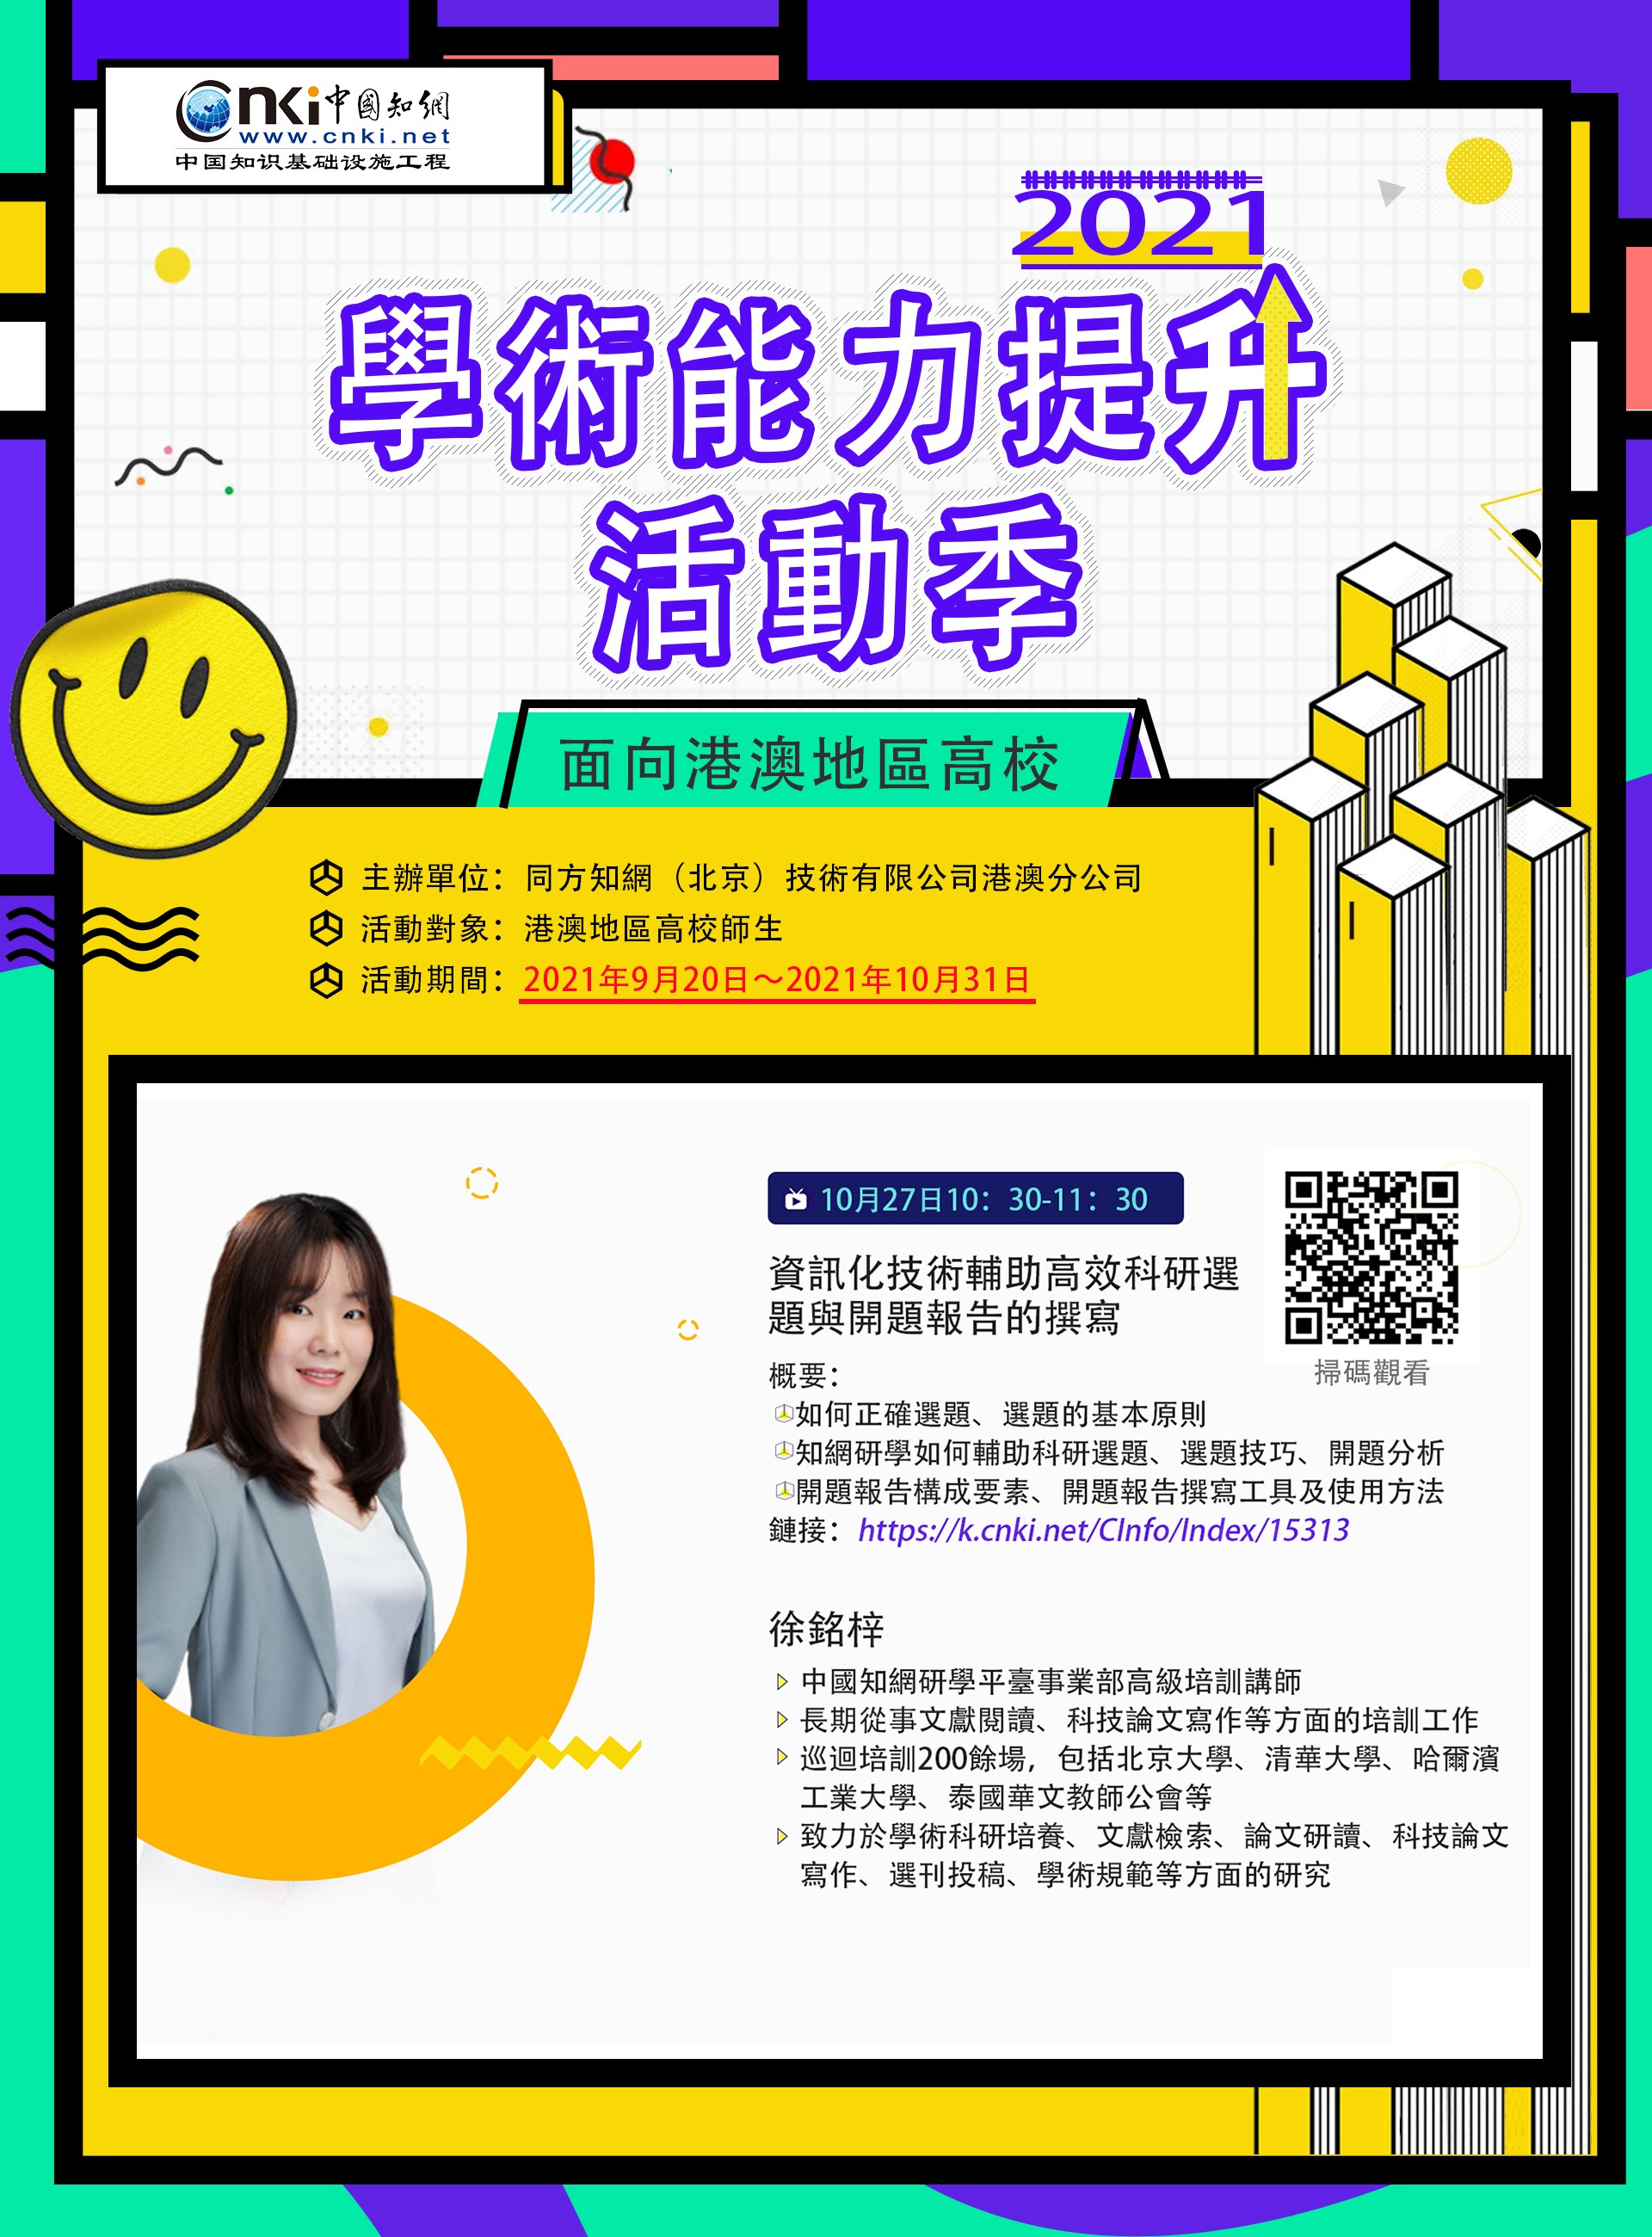 event-webinar-cnki-hkmo-20211027